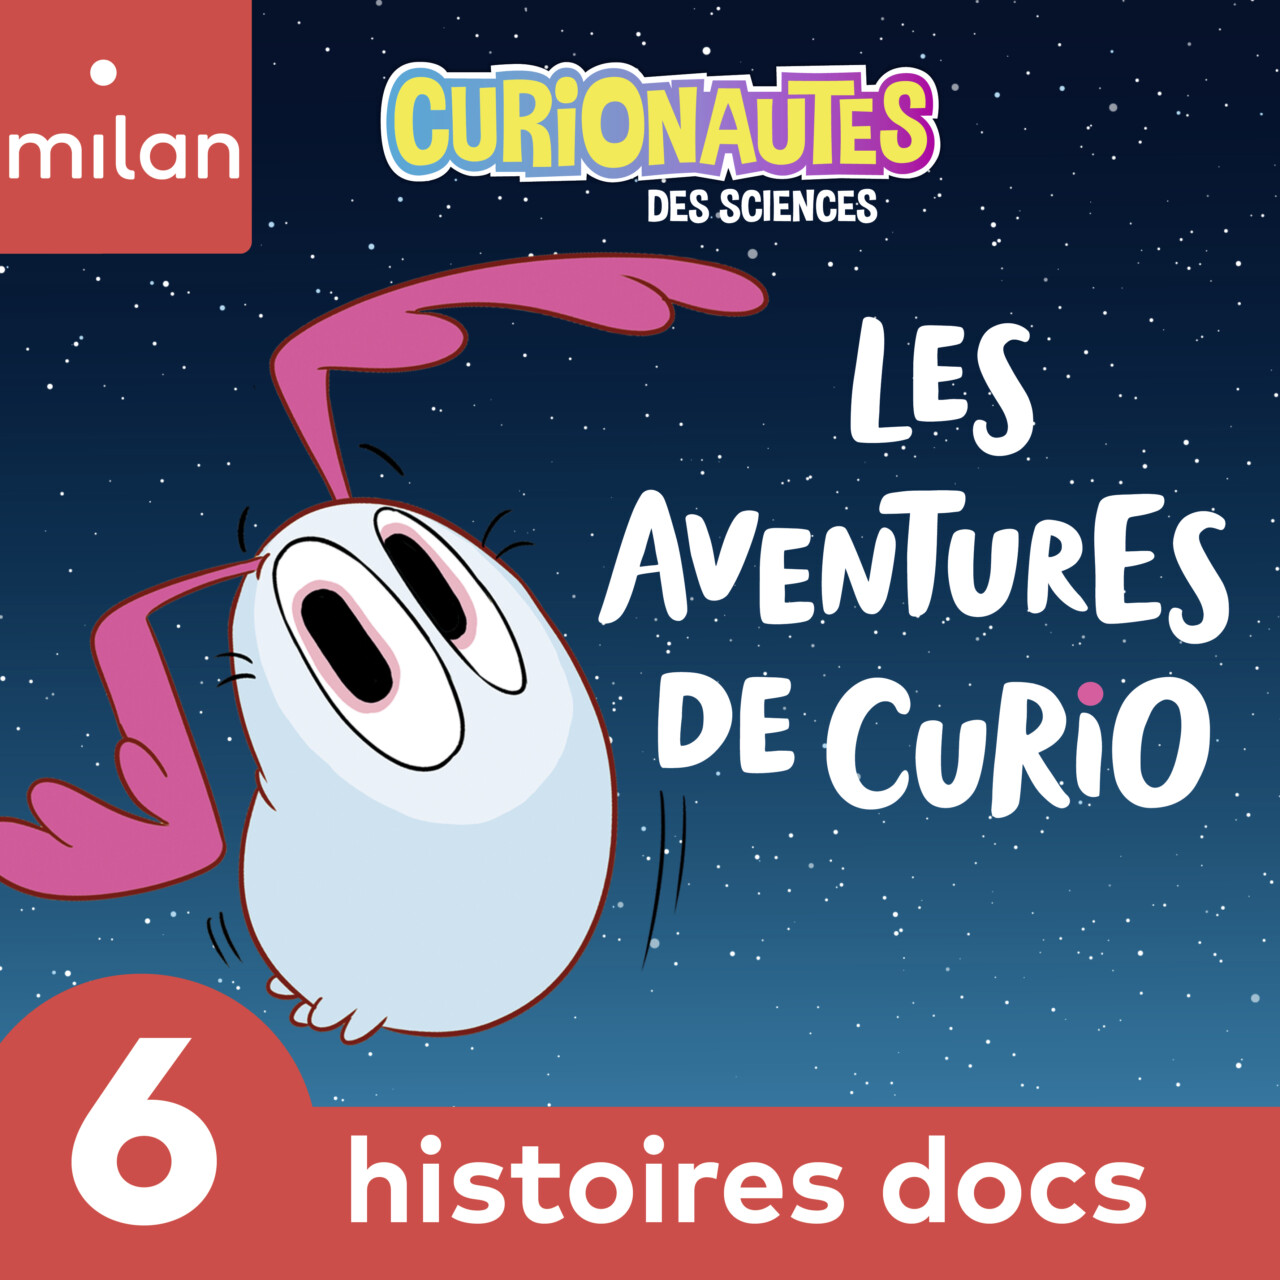 Les aventures de Curio : six histoires docs audio